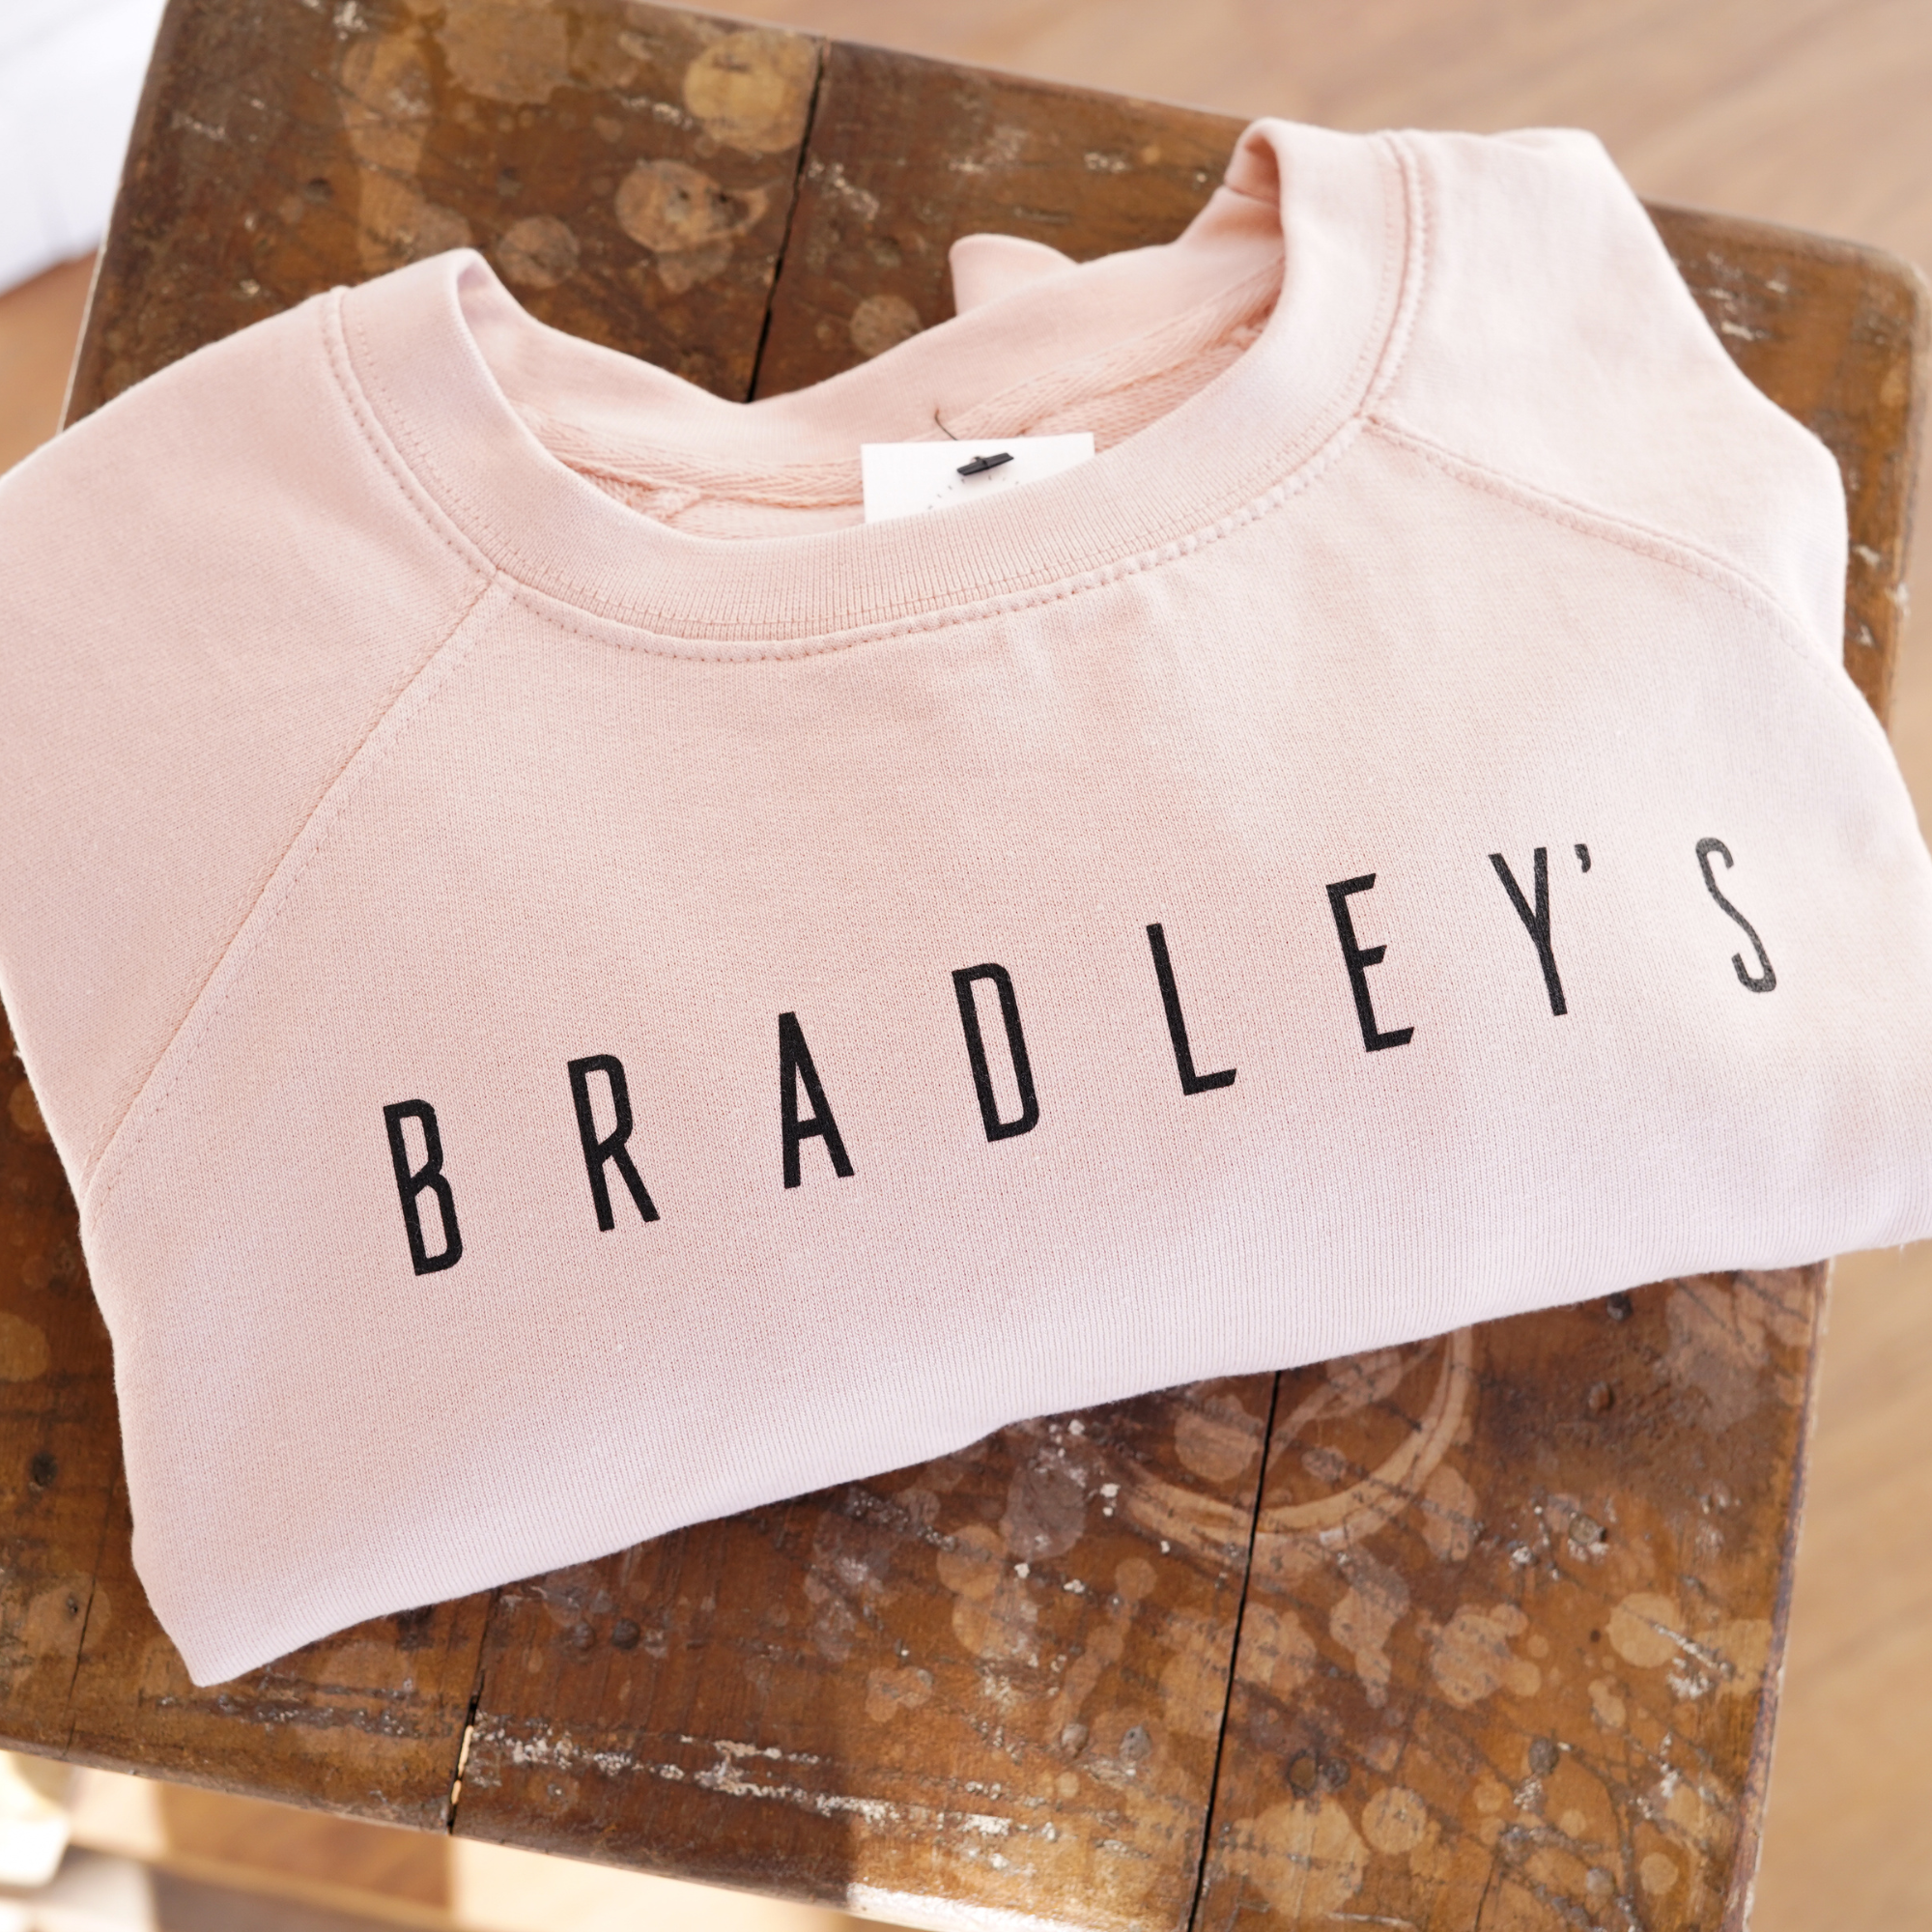 Bradley's Blush Sweatshirt